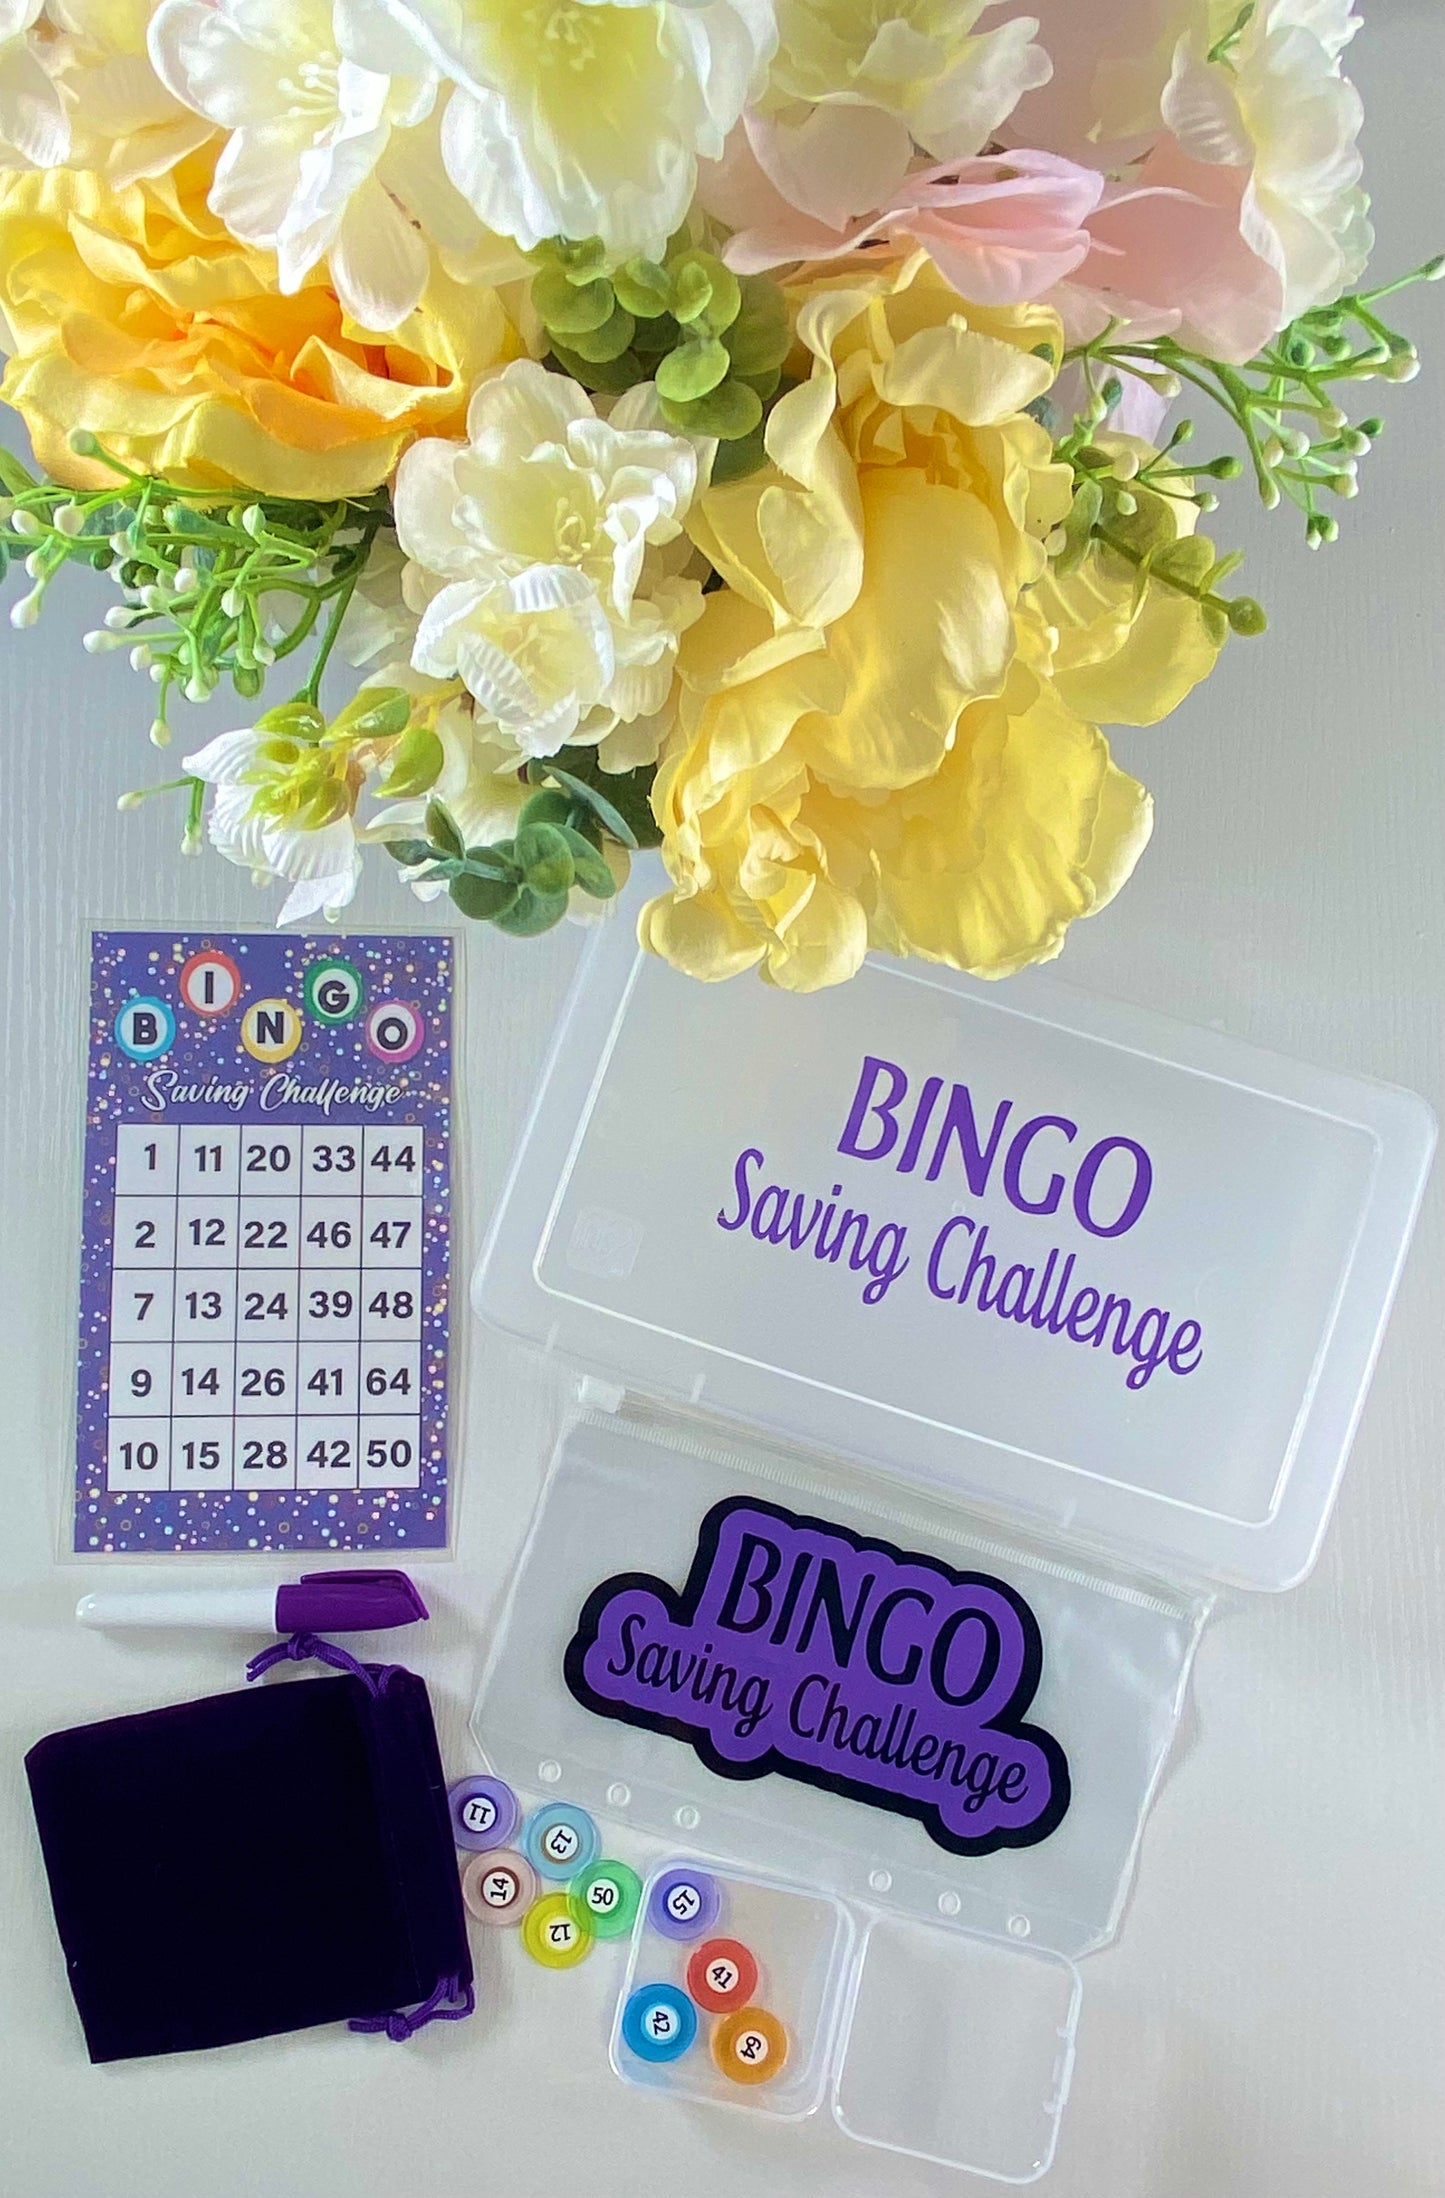 Bingo Saving Challenge Box Set (Budget-Friendly)